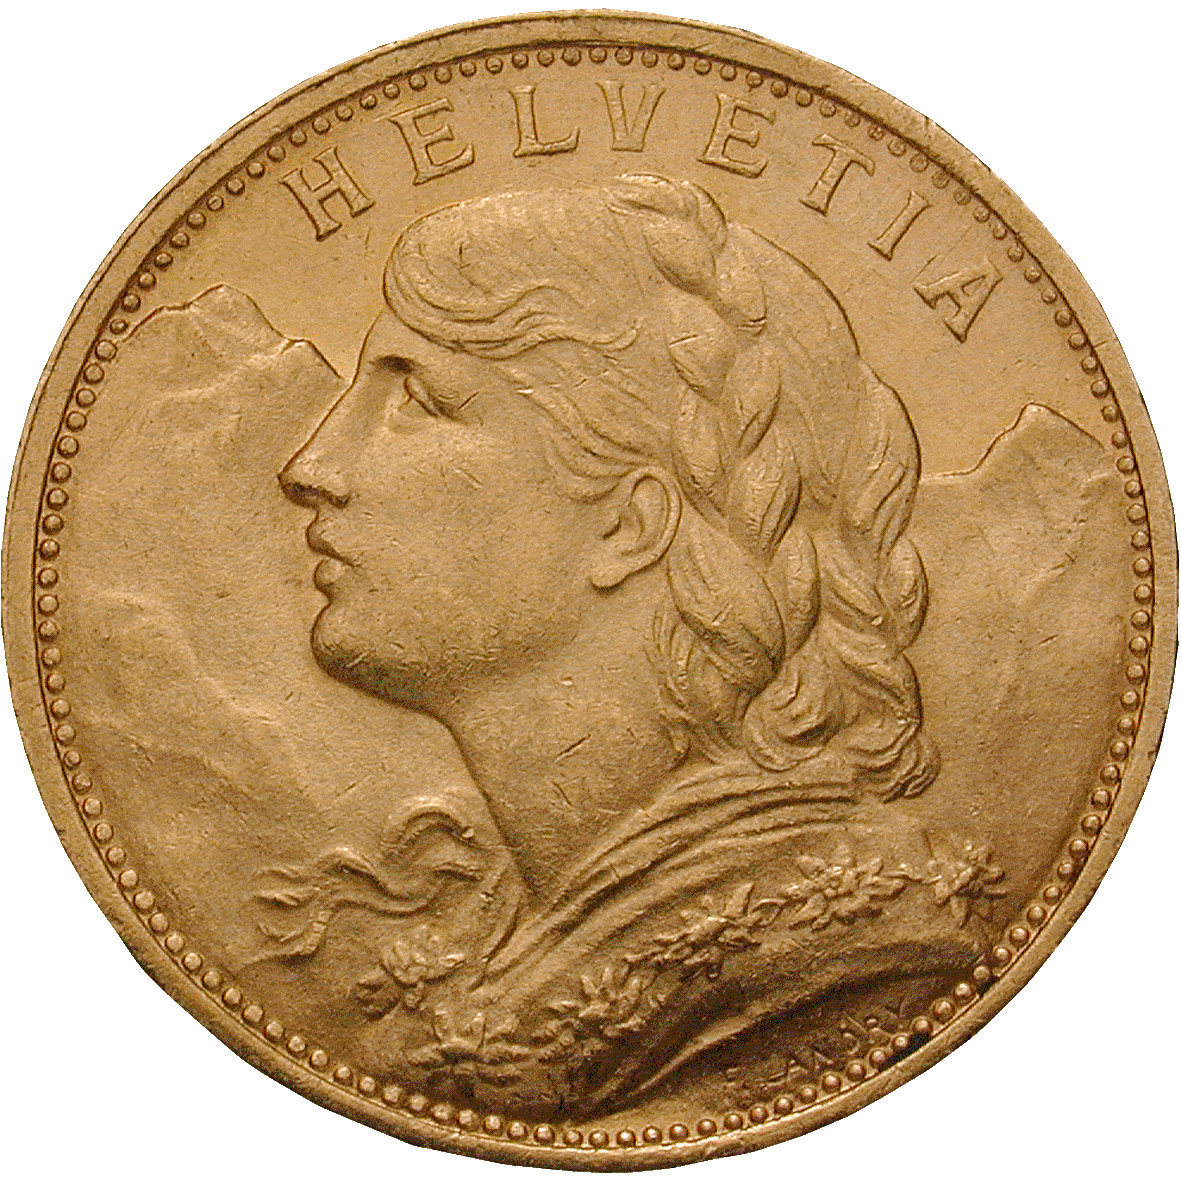 Swiss Confederation, 20 Francs (Vreneli) 1897 (obverse)